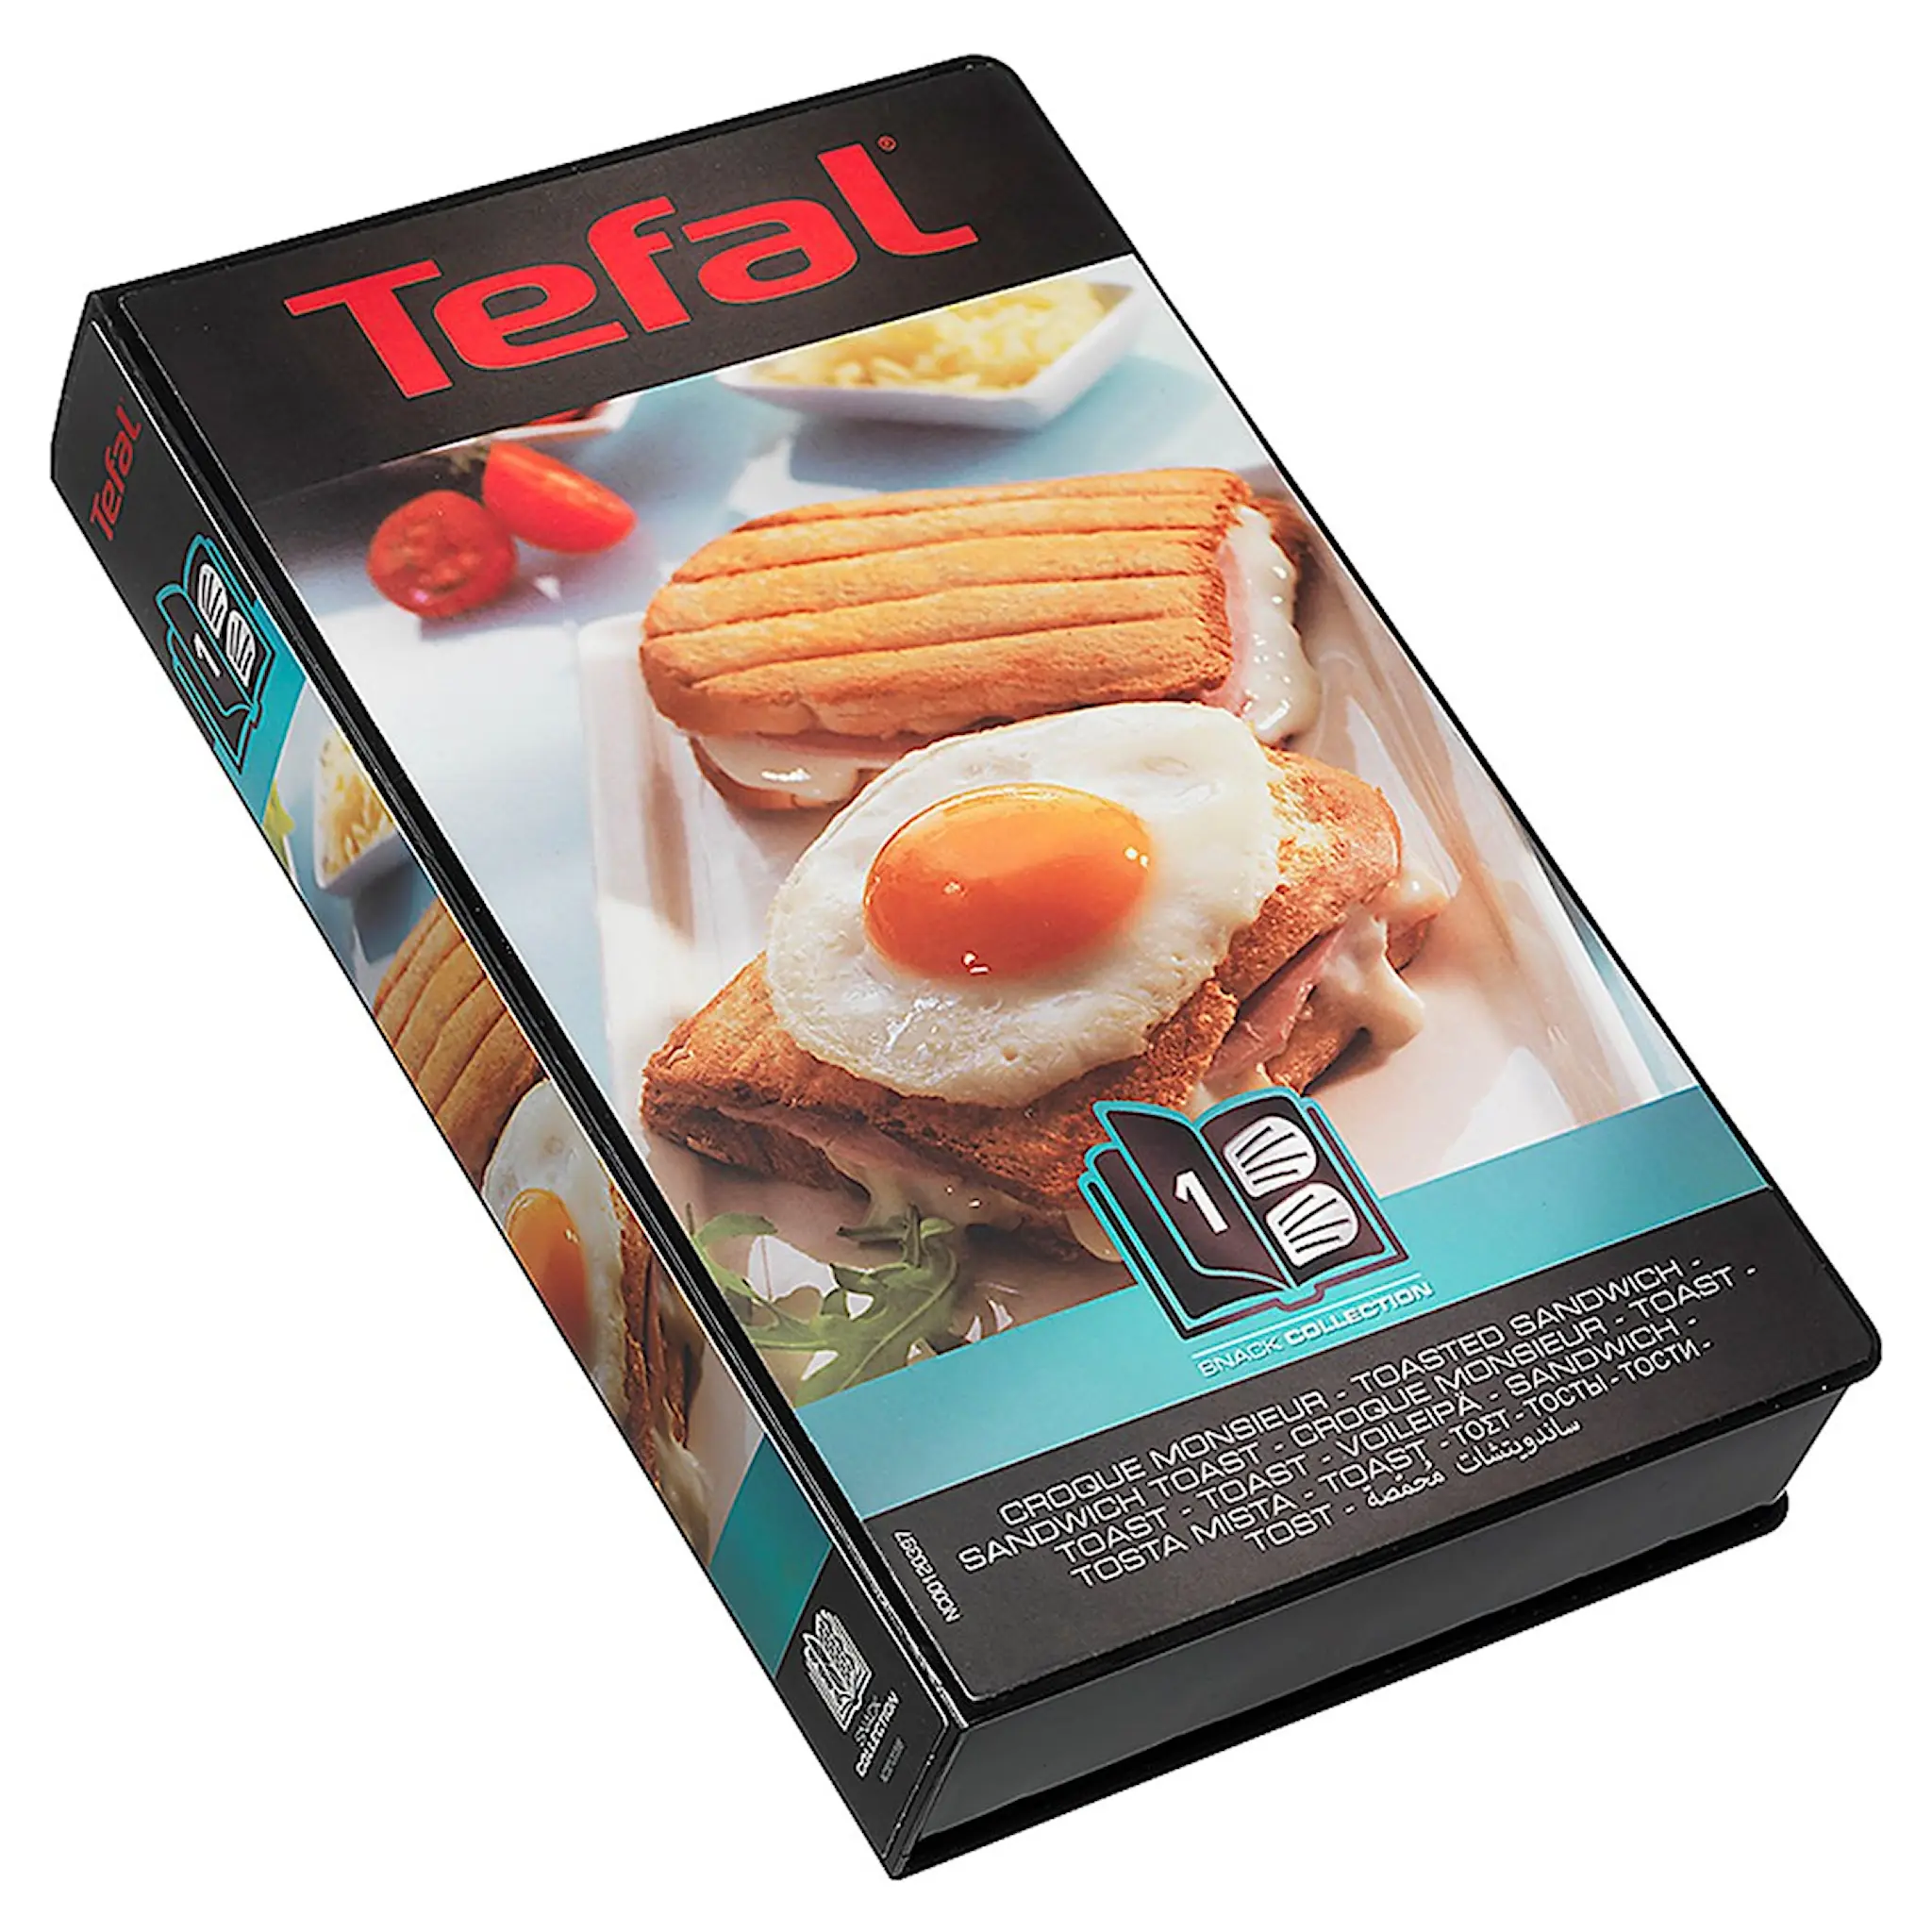 Tefal Snack toastjern plater Box 1: Toasted Sandwich